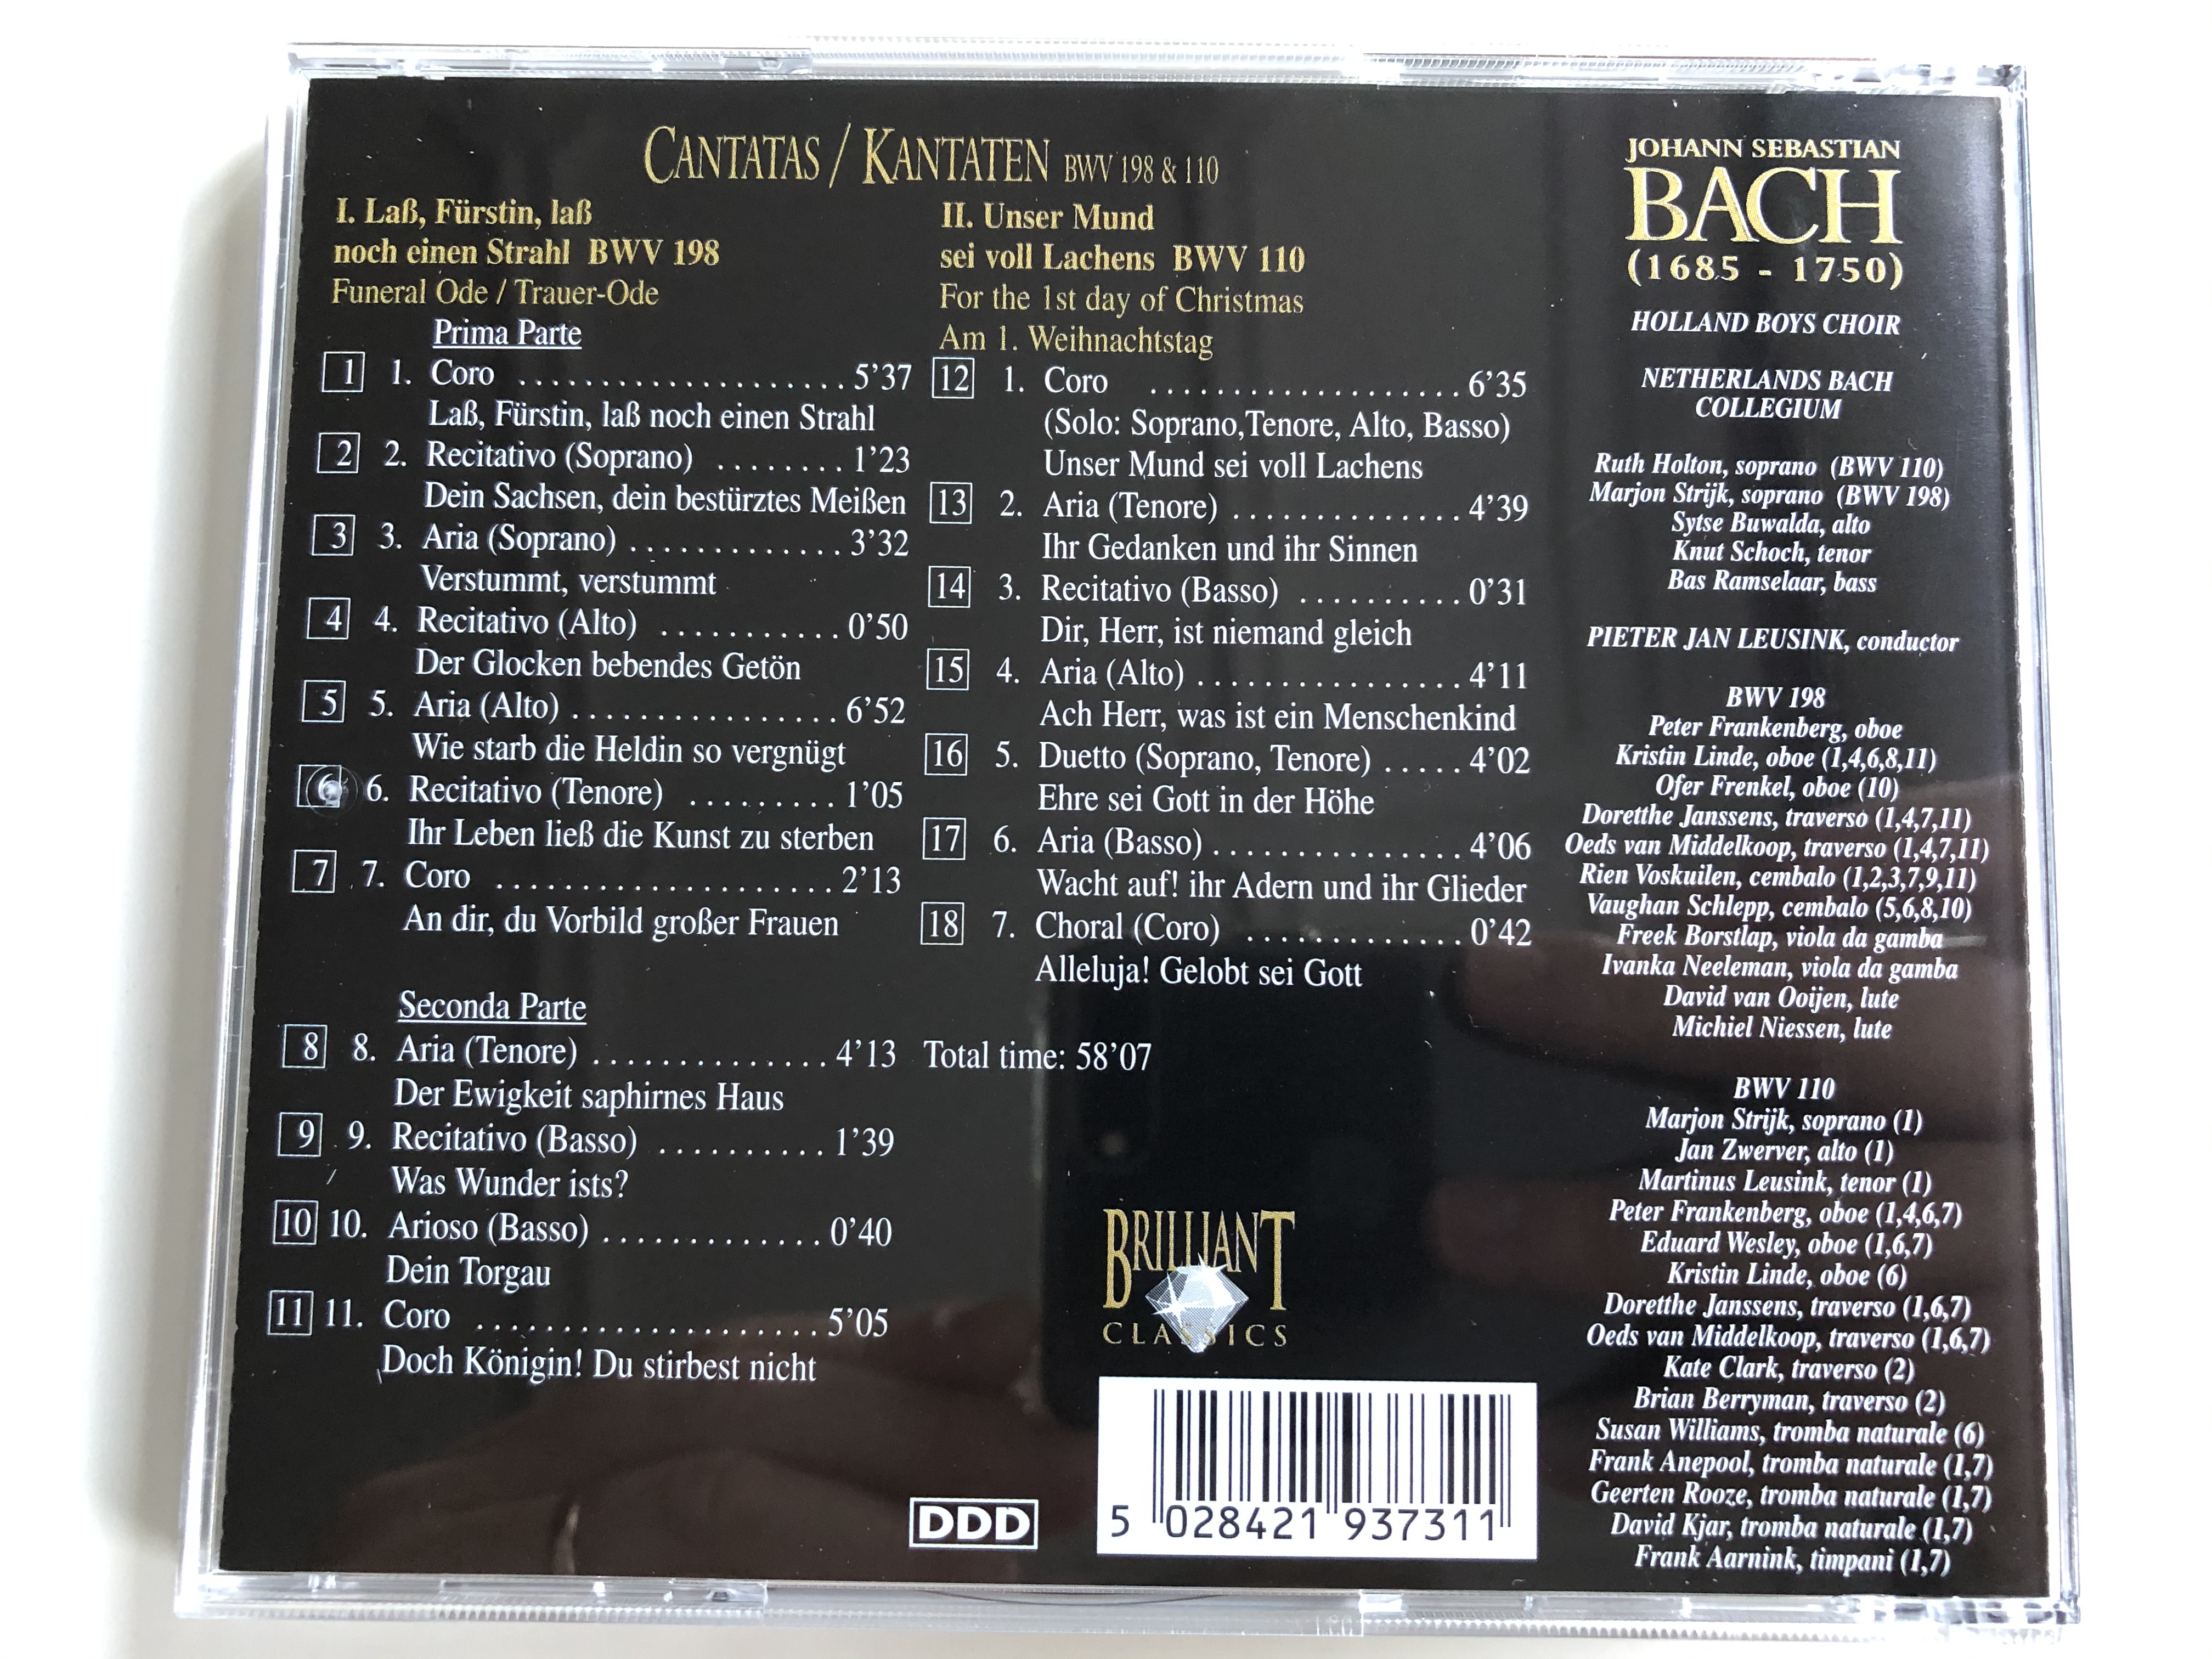 bach-edition-cantatas-kantaten-la-f-rstin-la-noch-einen-strahl-bwv-198-unser-mund-sei-voll-lachens-bwv-110-brilliant-classics-audio-cd-993731-4-.jpg